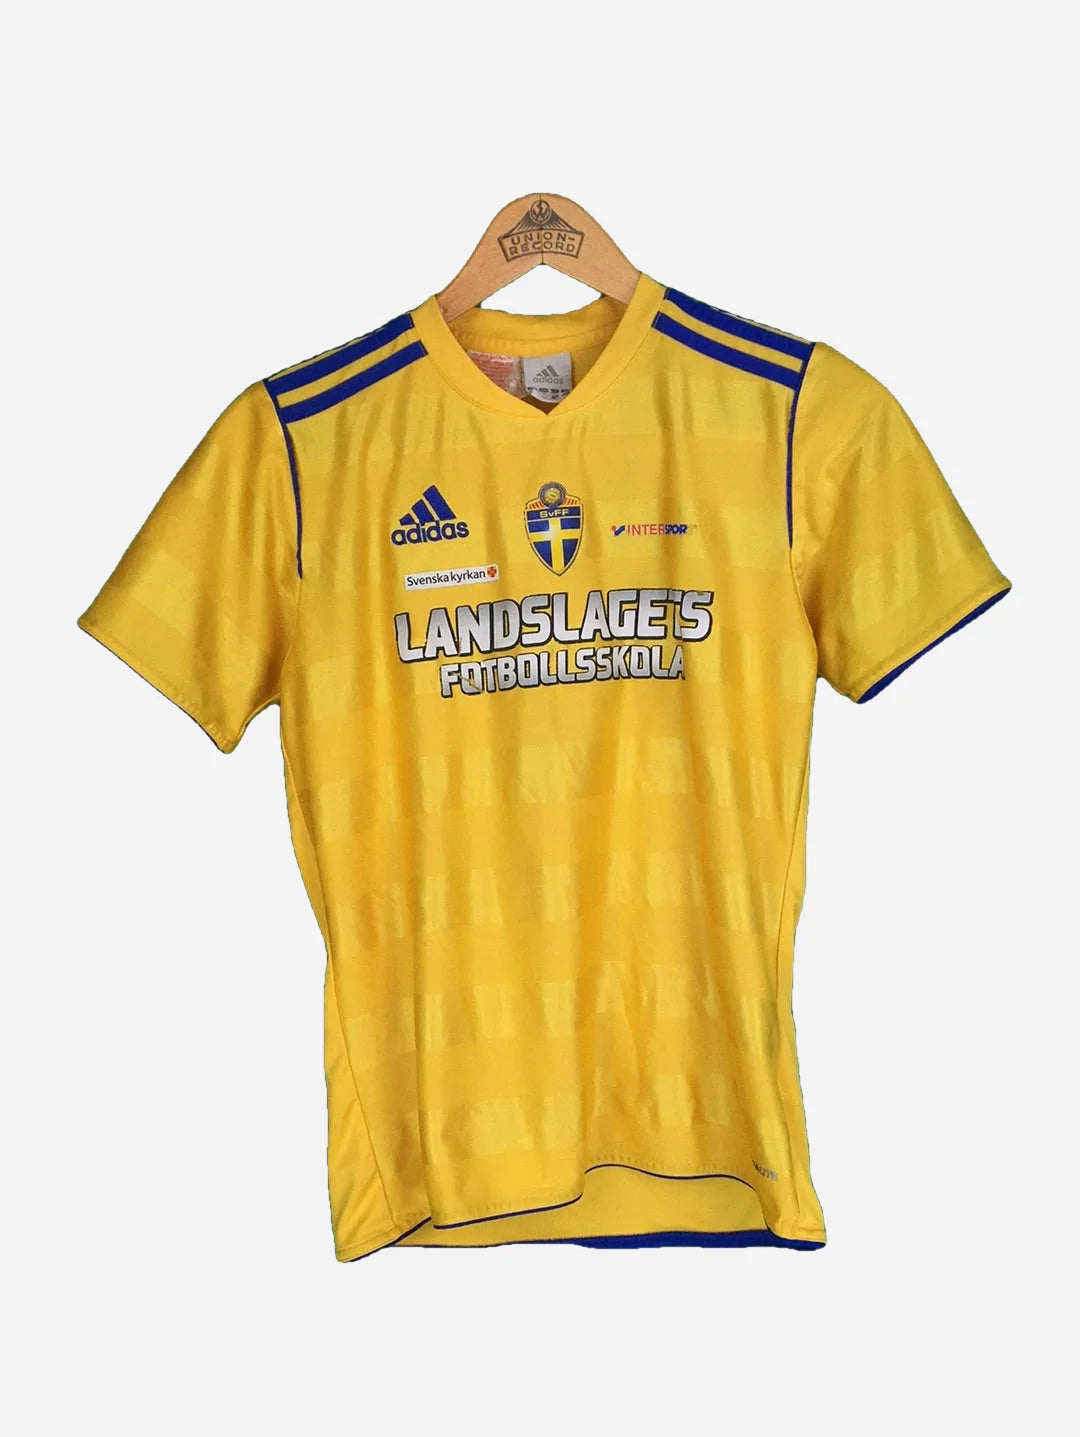 Adidas Sweden jersey (XS)